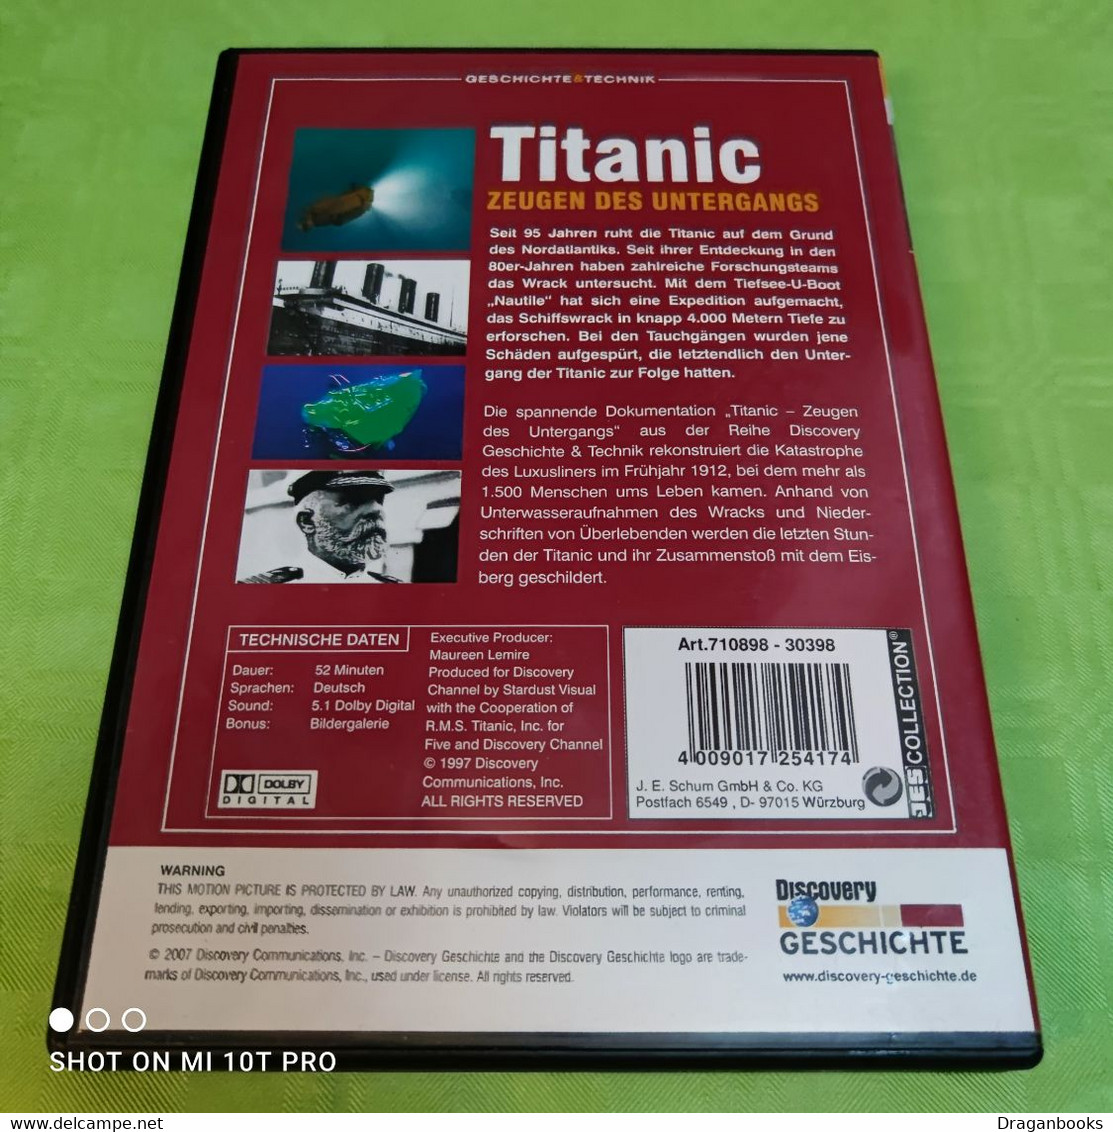 Geschichte & Technik - Titanic - Documentaires